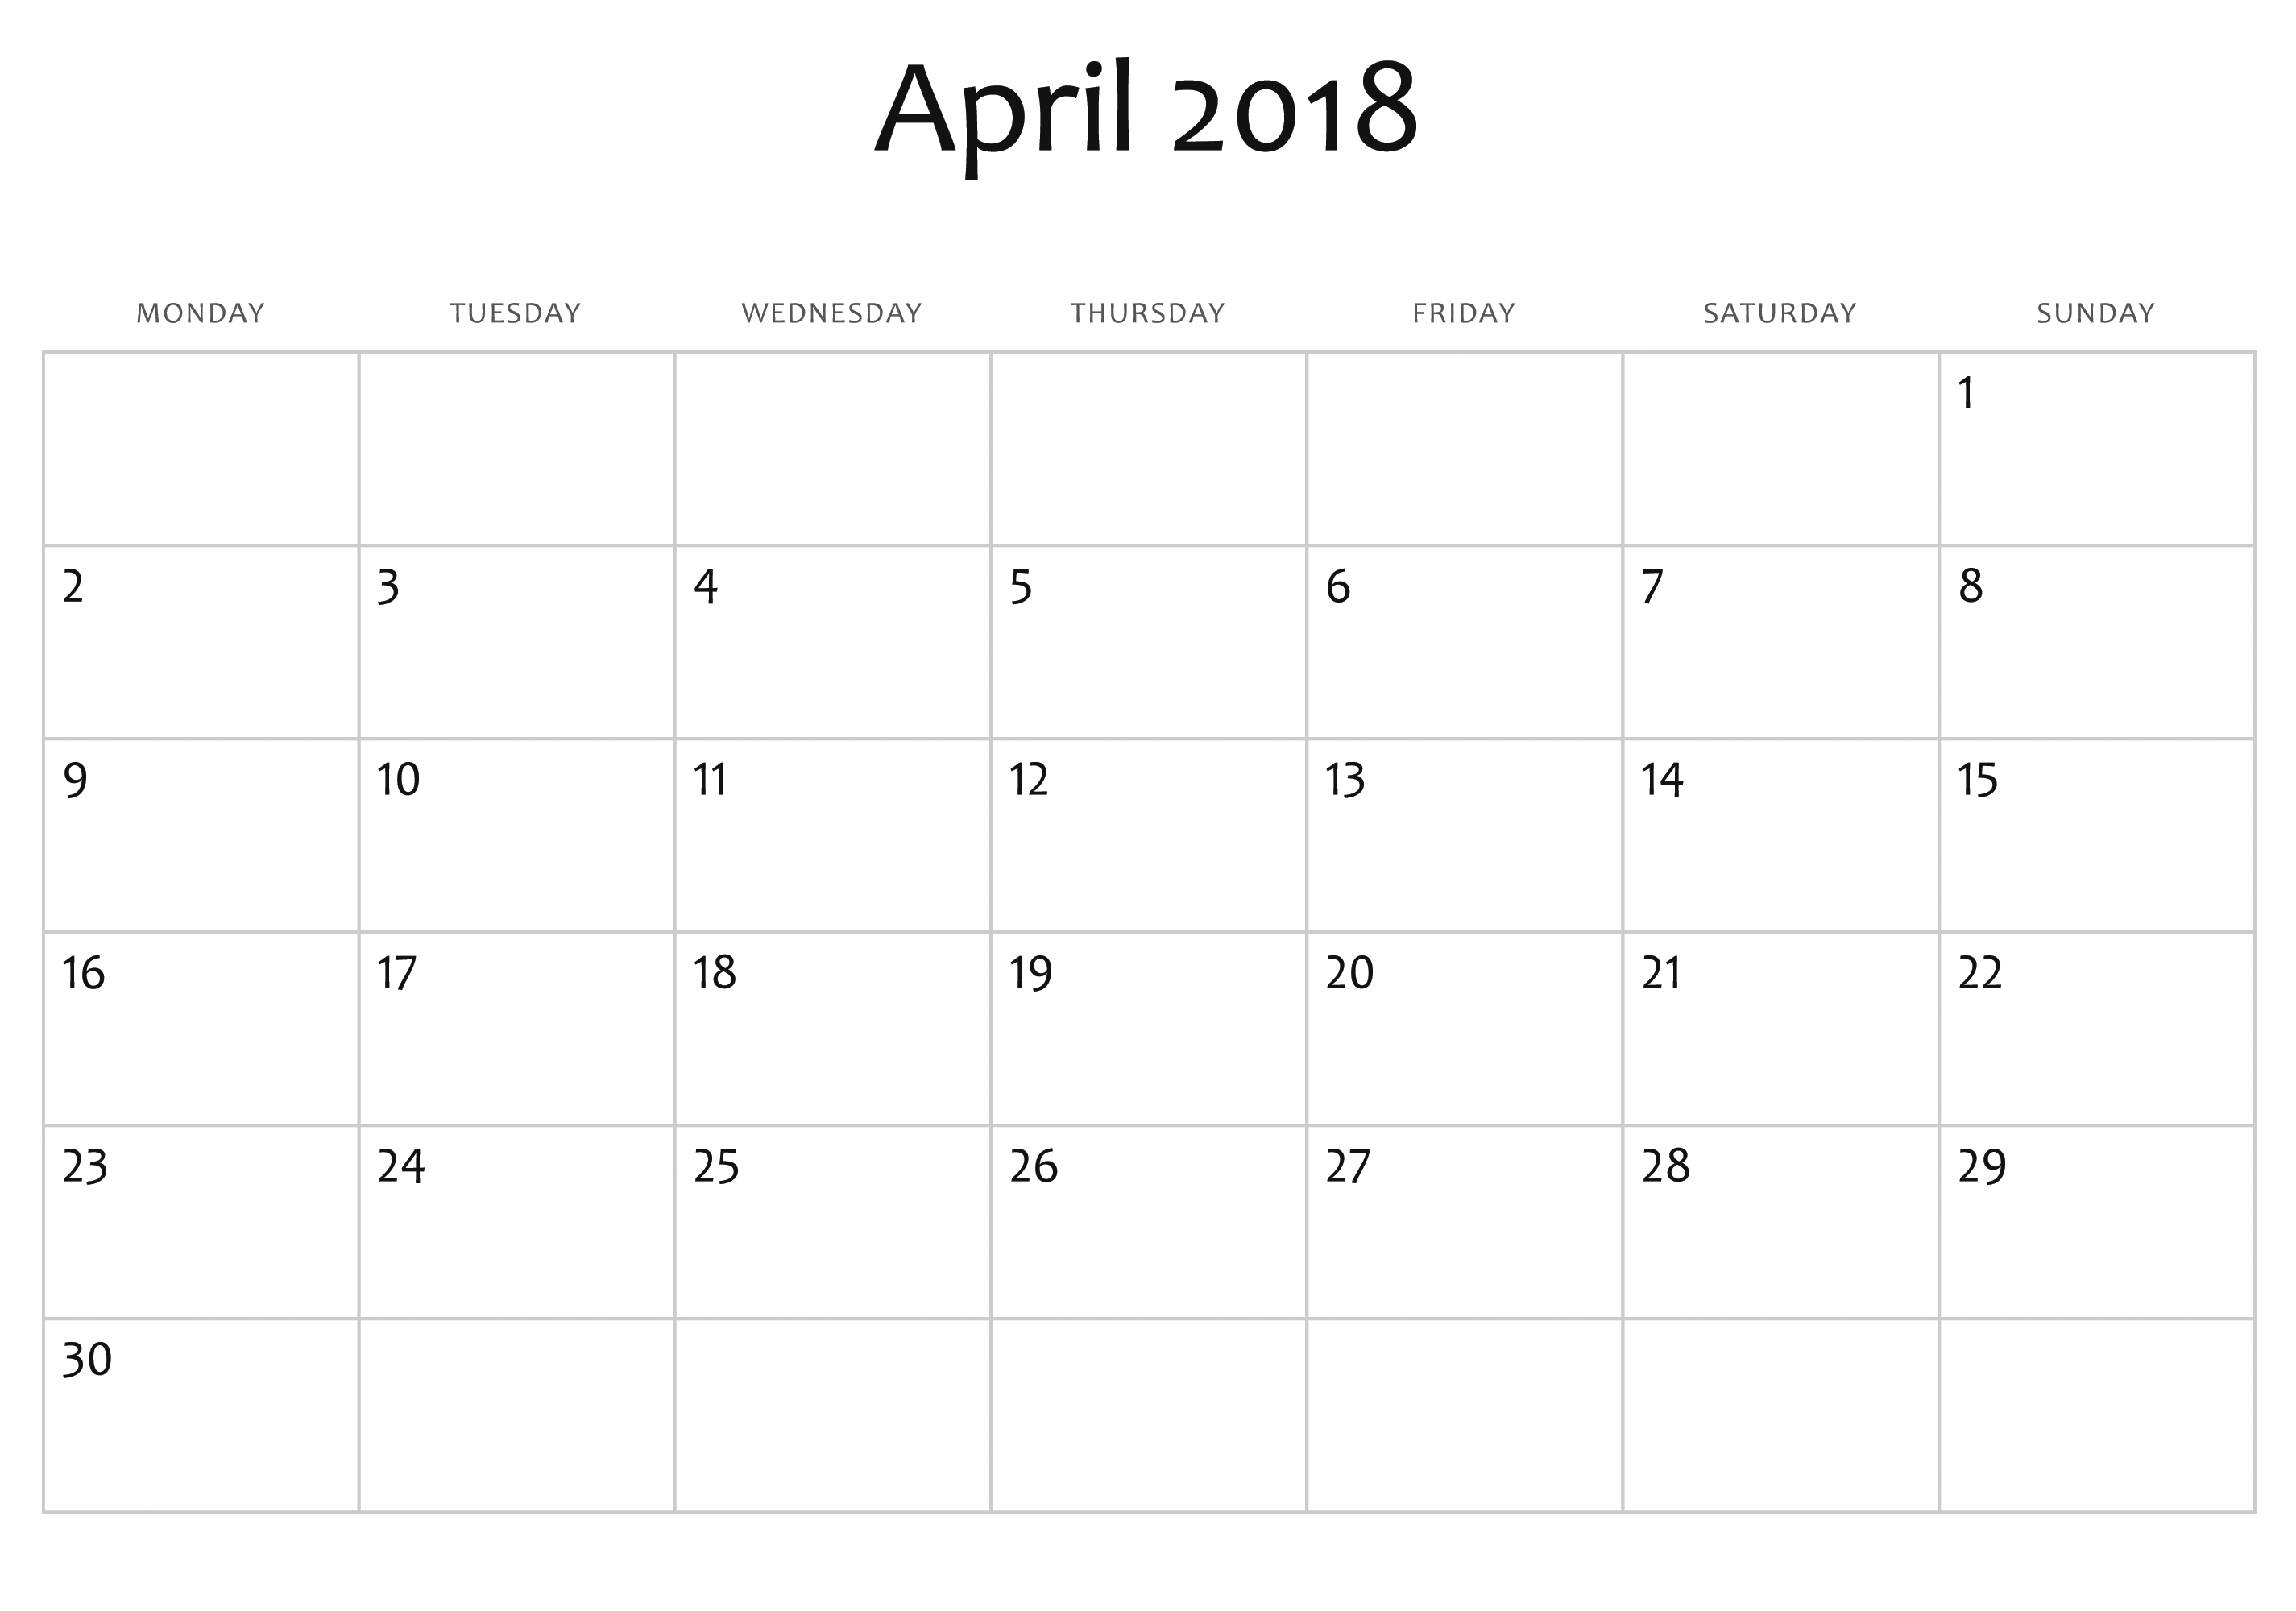 April 2018 Calendar Printable [Free] | Site Provides Printable Calendar That You Can Type On